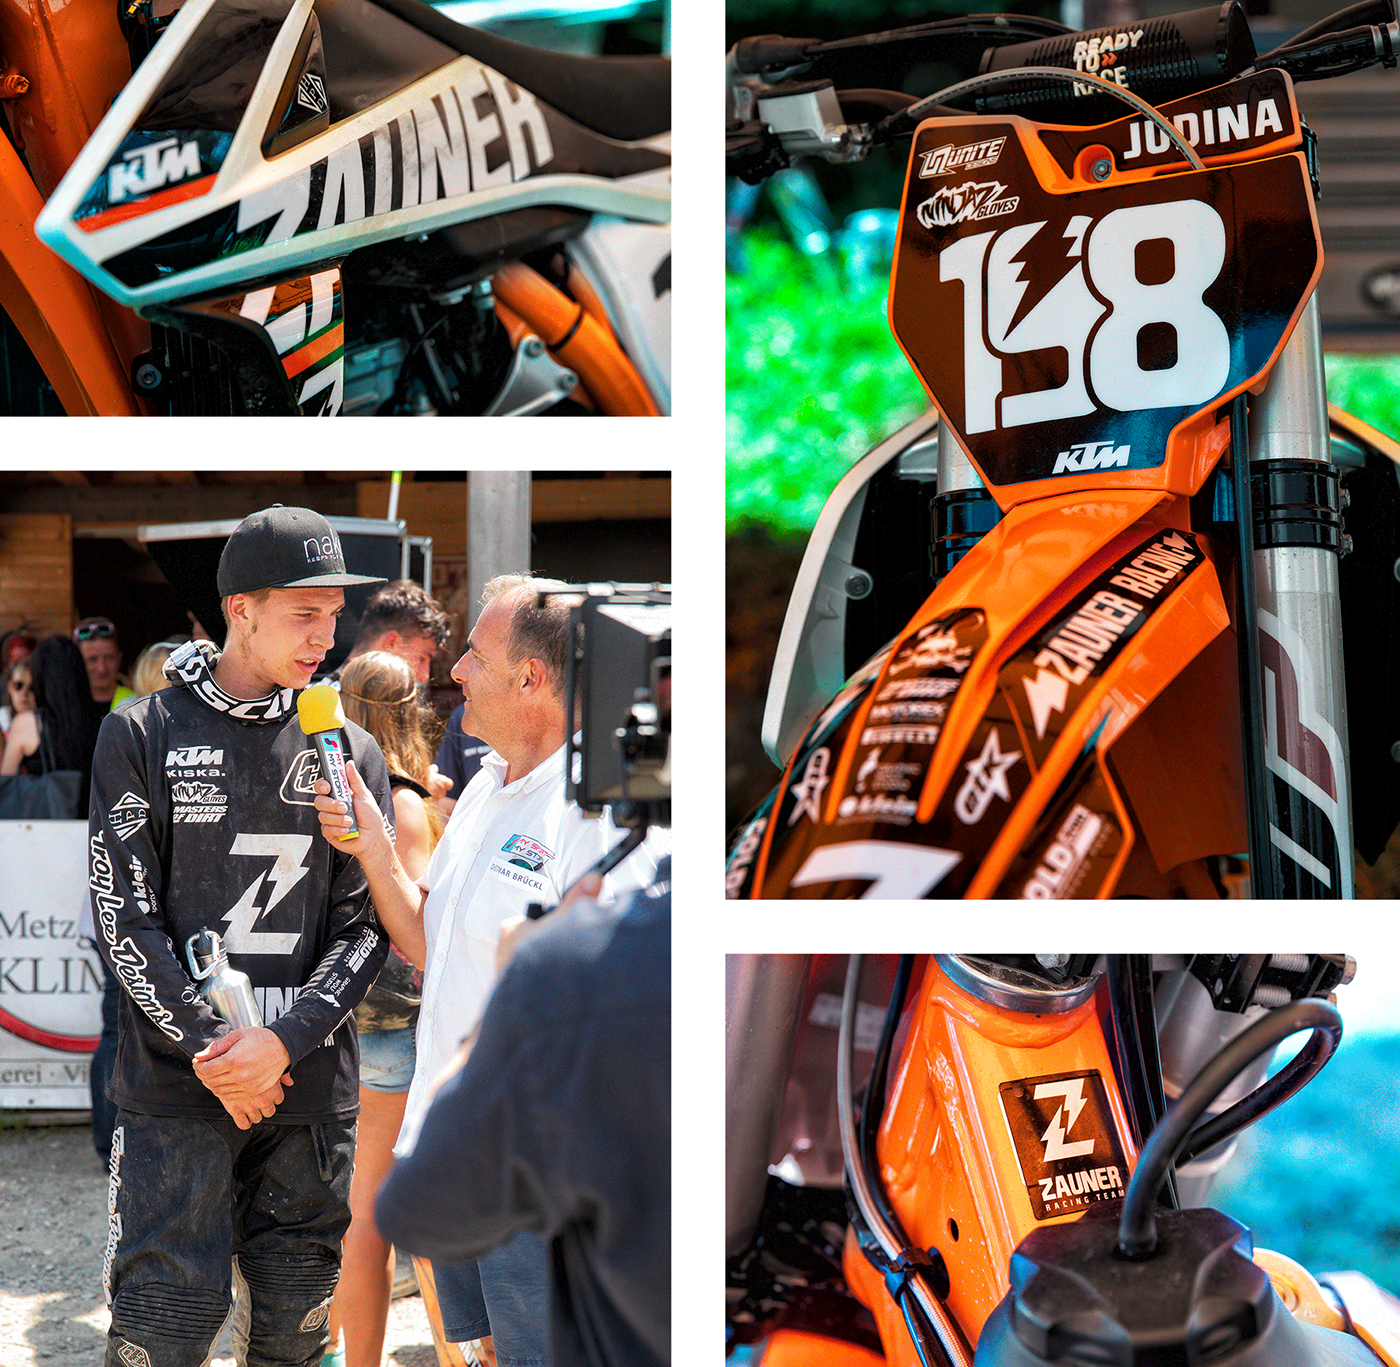 design Corporate Design KTM Motocross Zauner Racing team Ready to race ctg branding 